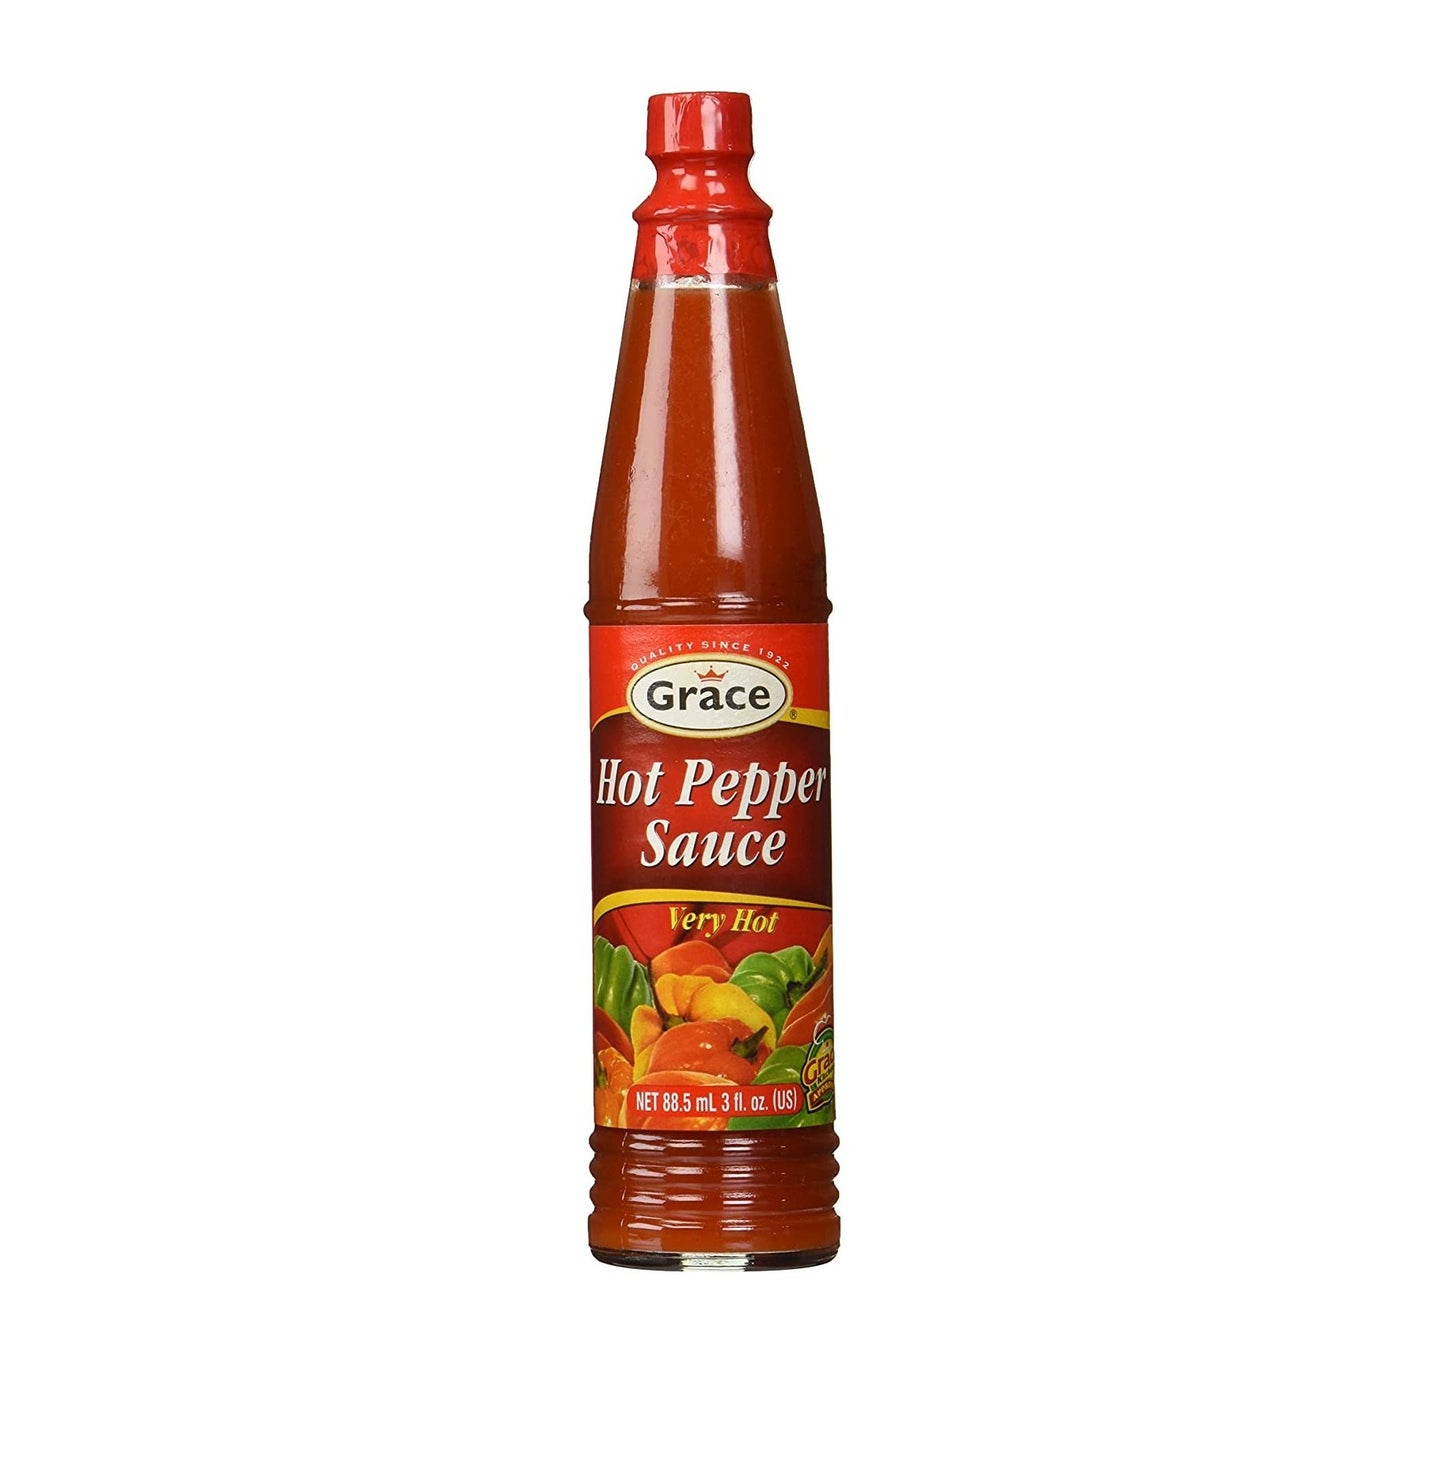 Grace Hot Pepper Sauce 85ml Box of 12